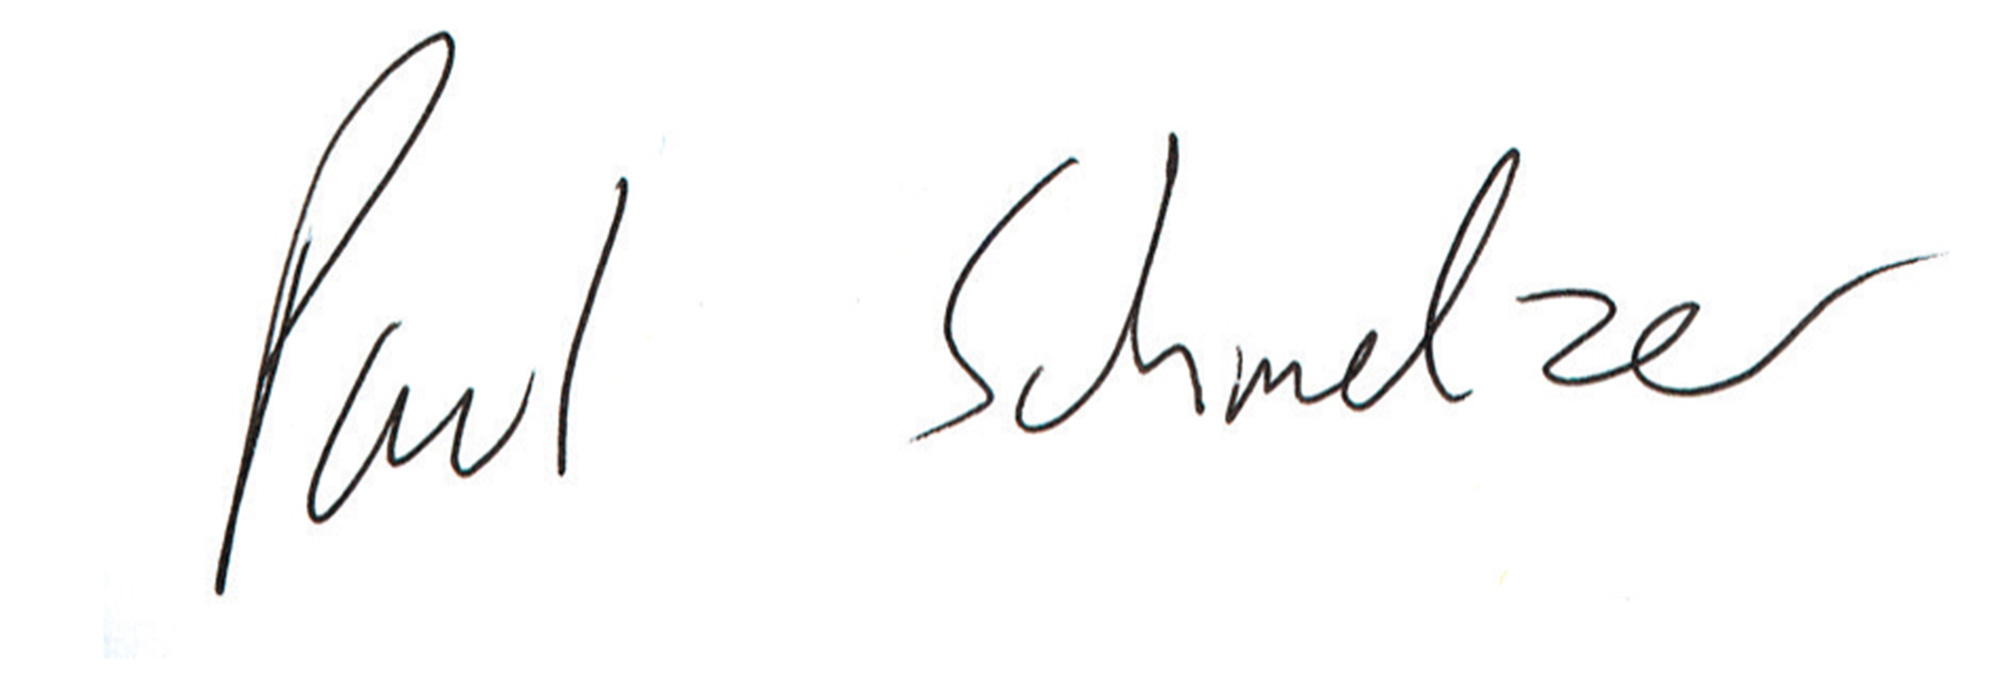 A photograph of Naomi Klein's written version of the name Paul Schmelzer.